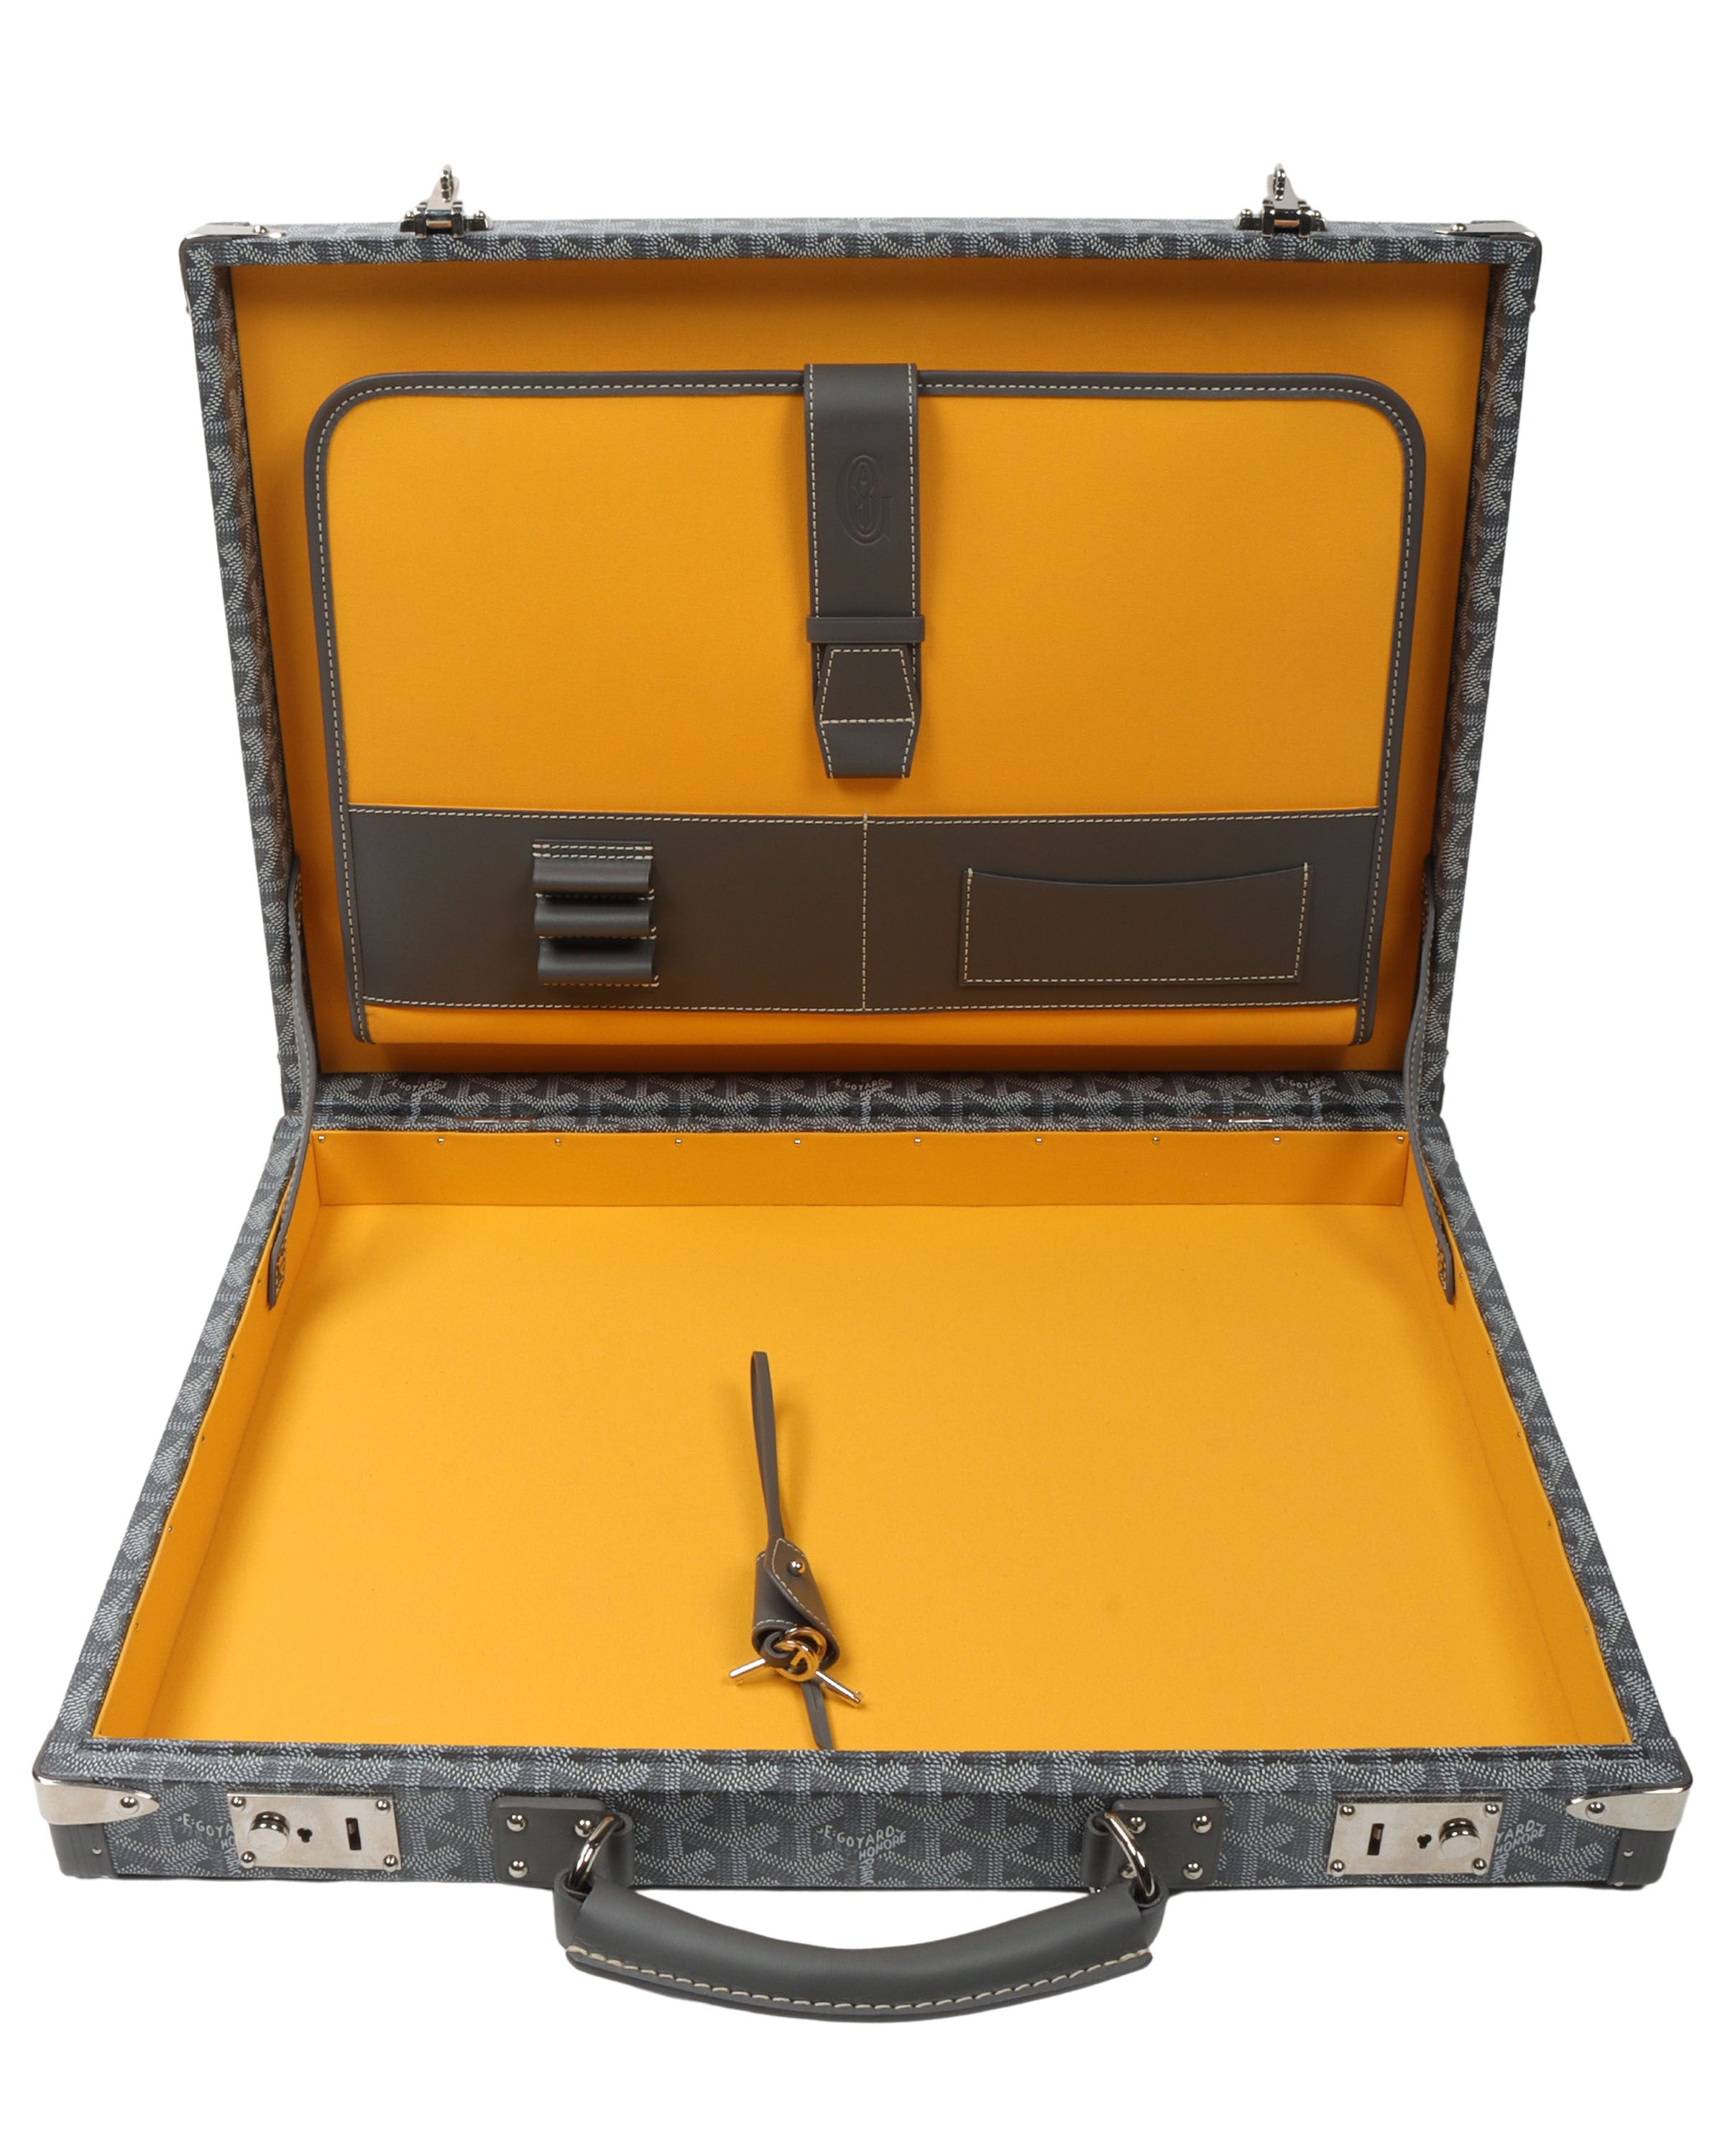 Chevron Coated Canvas Mallette Manoir Briefcase